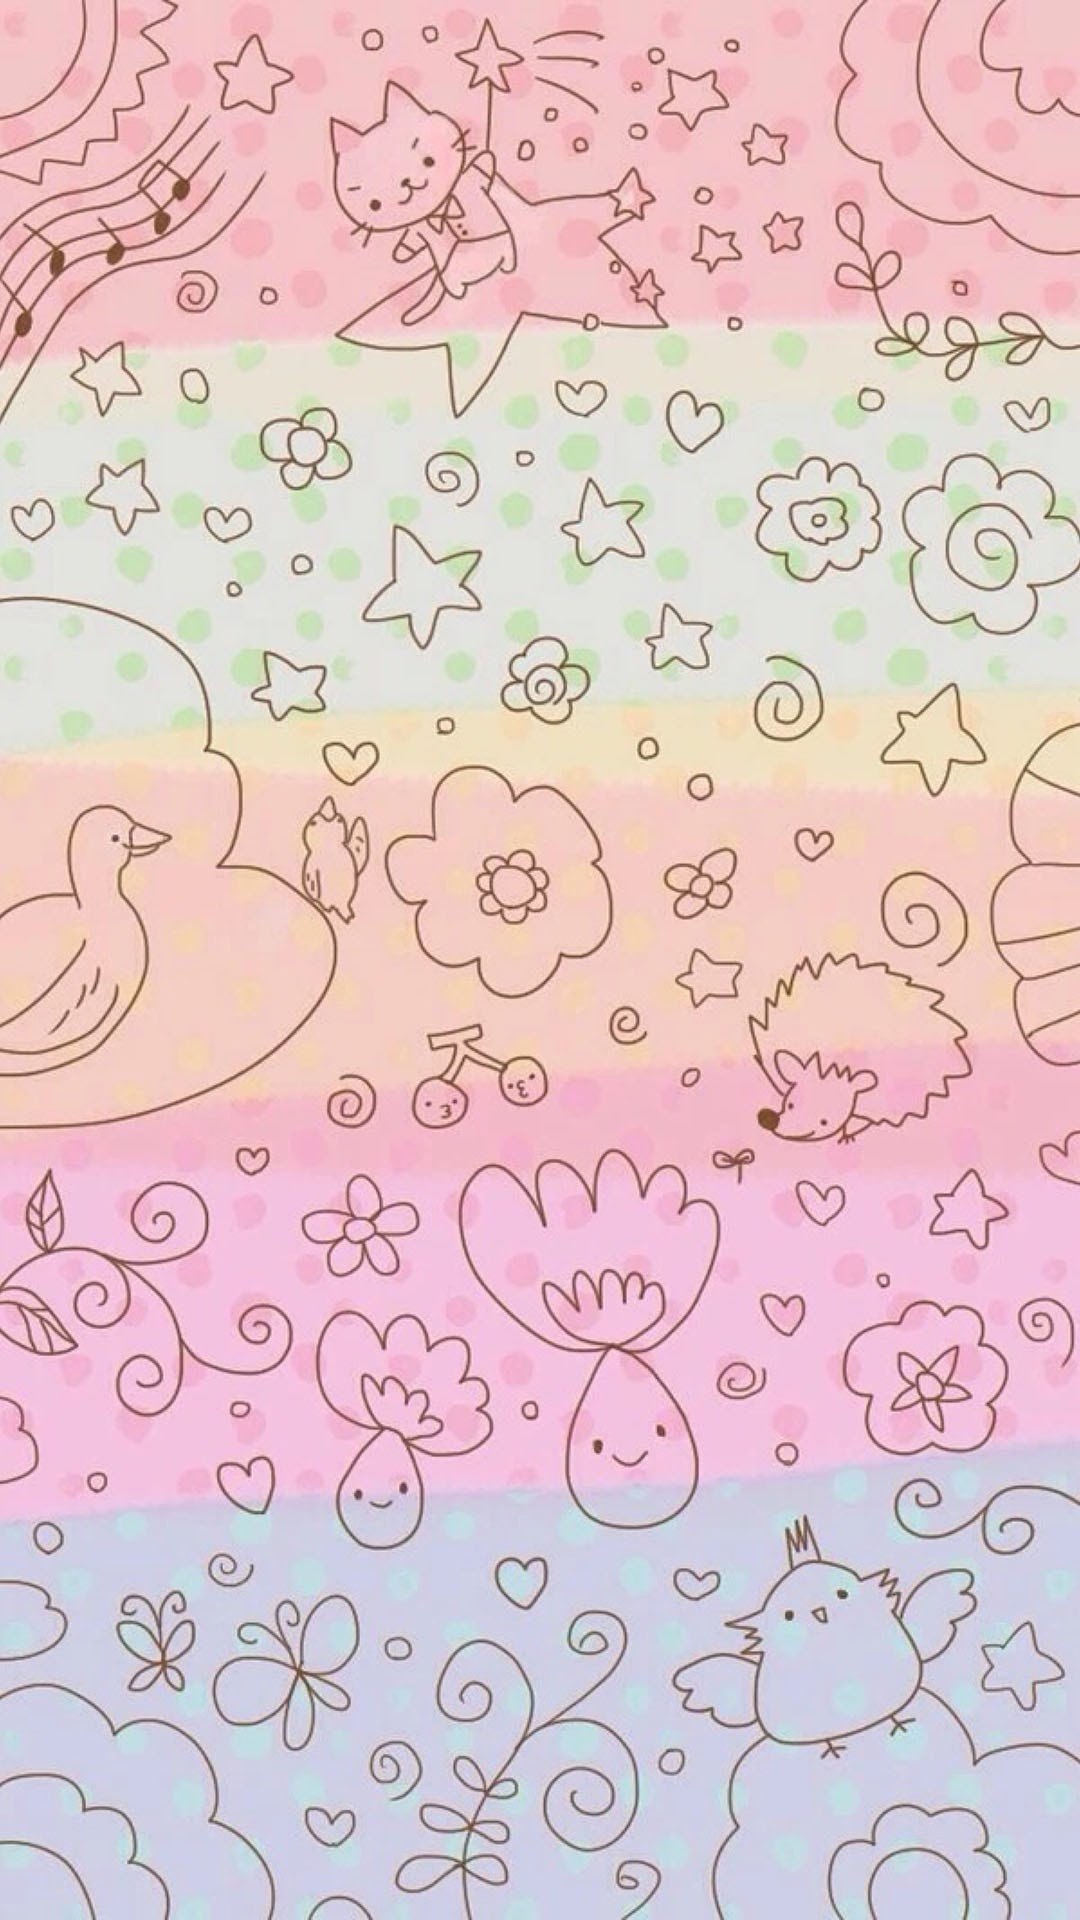 Dreamy Anime Cute Kitten Pattern Painting Background #iPhone #wallpaper